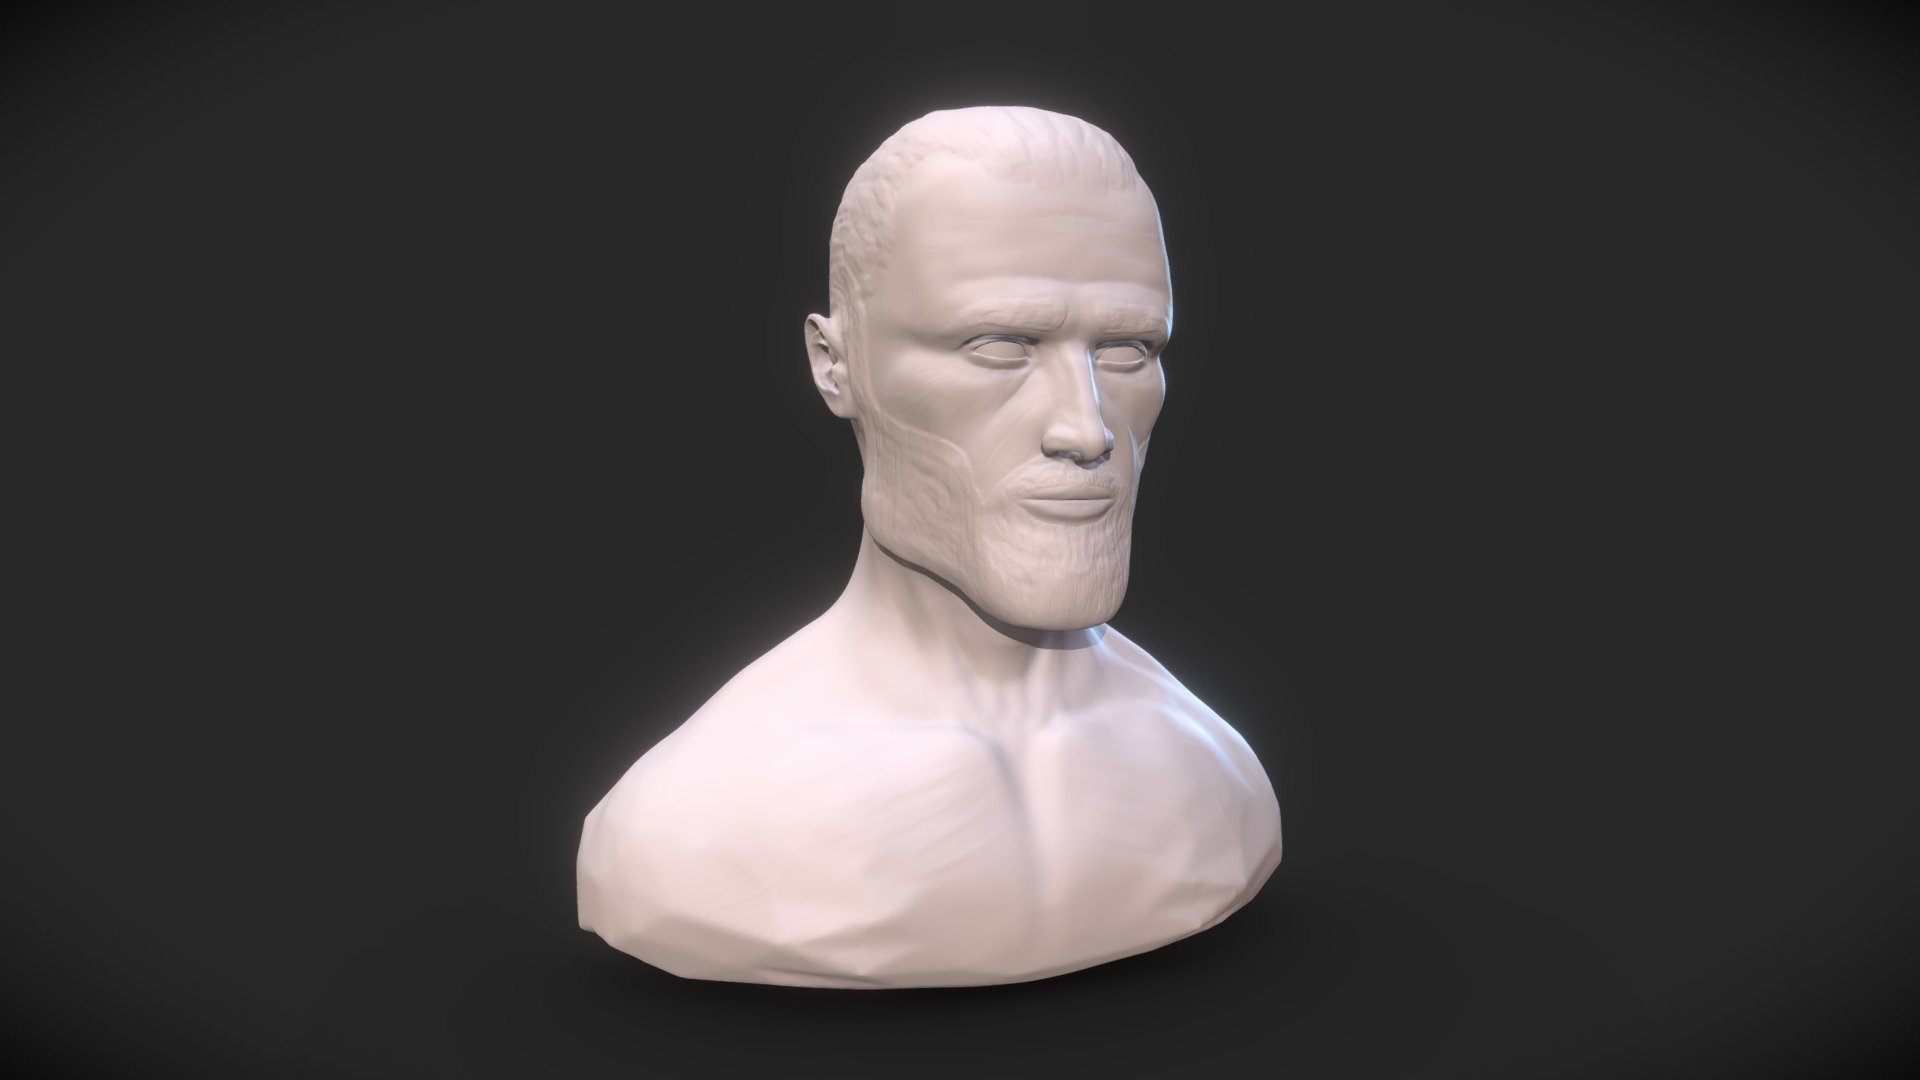 3D model Gigachad Face Model VR / AR / low-poly